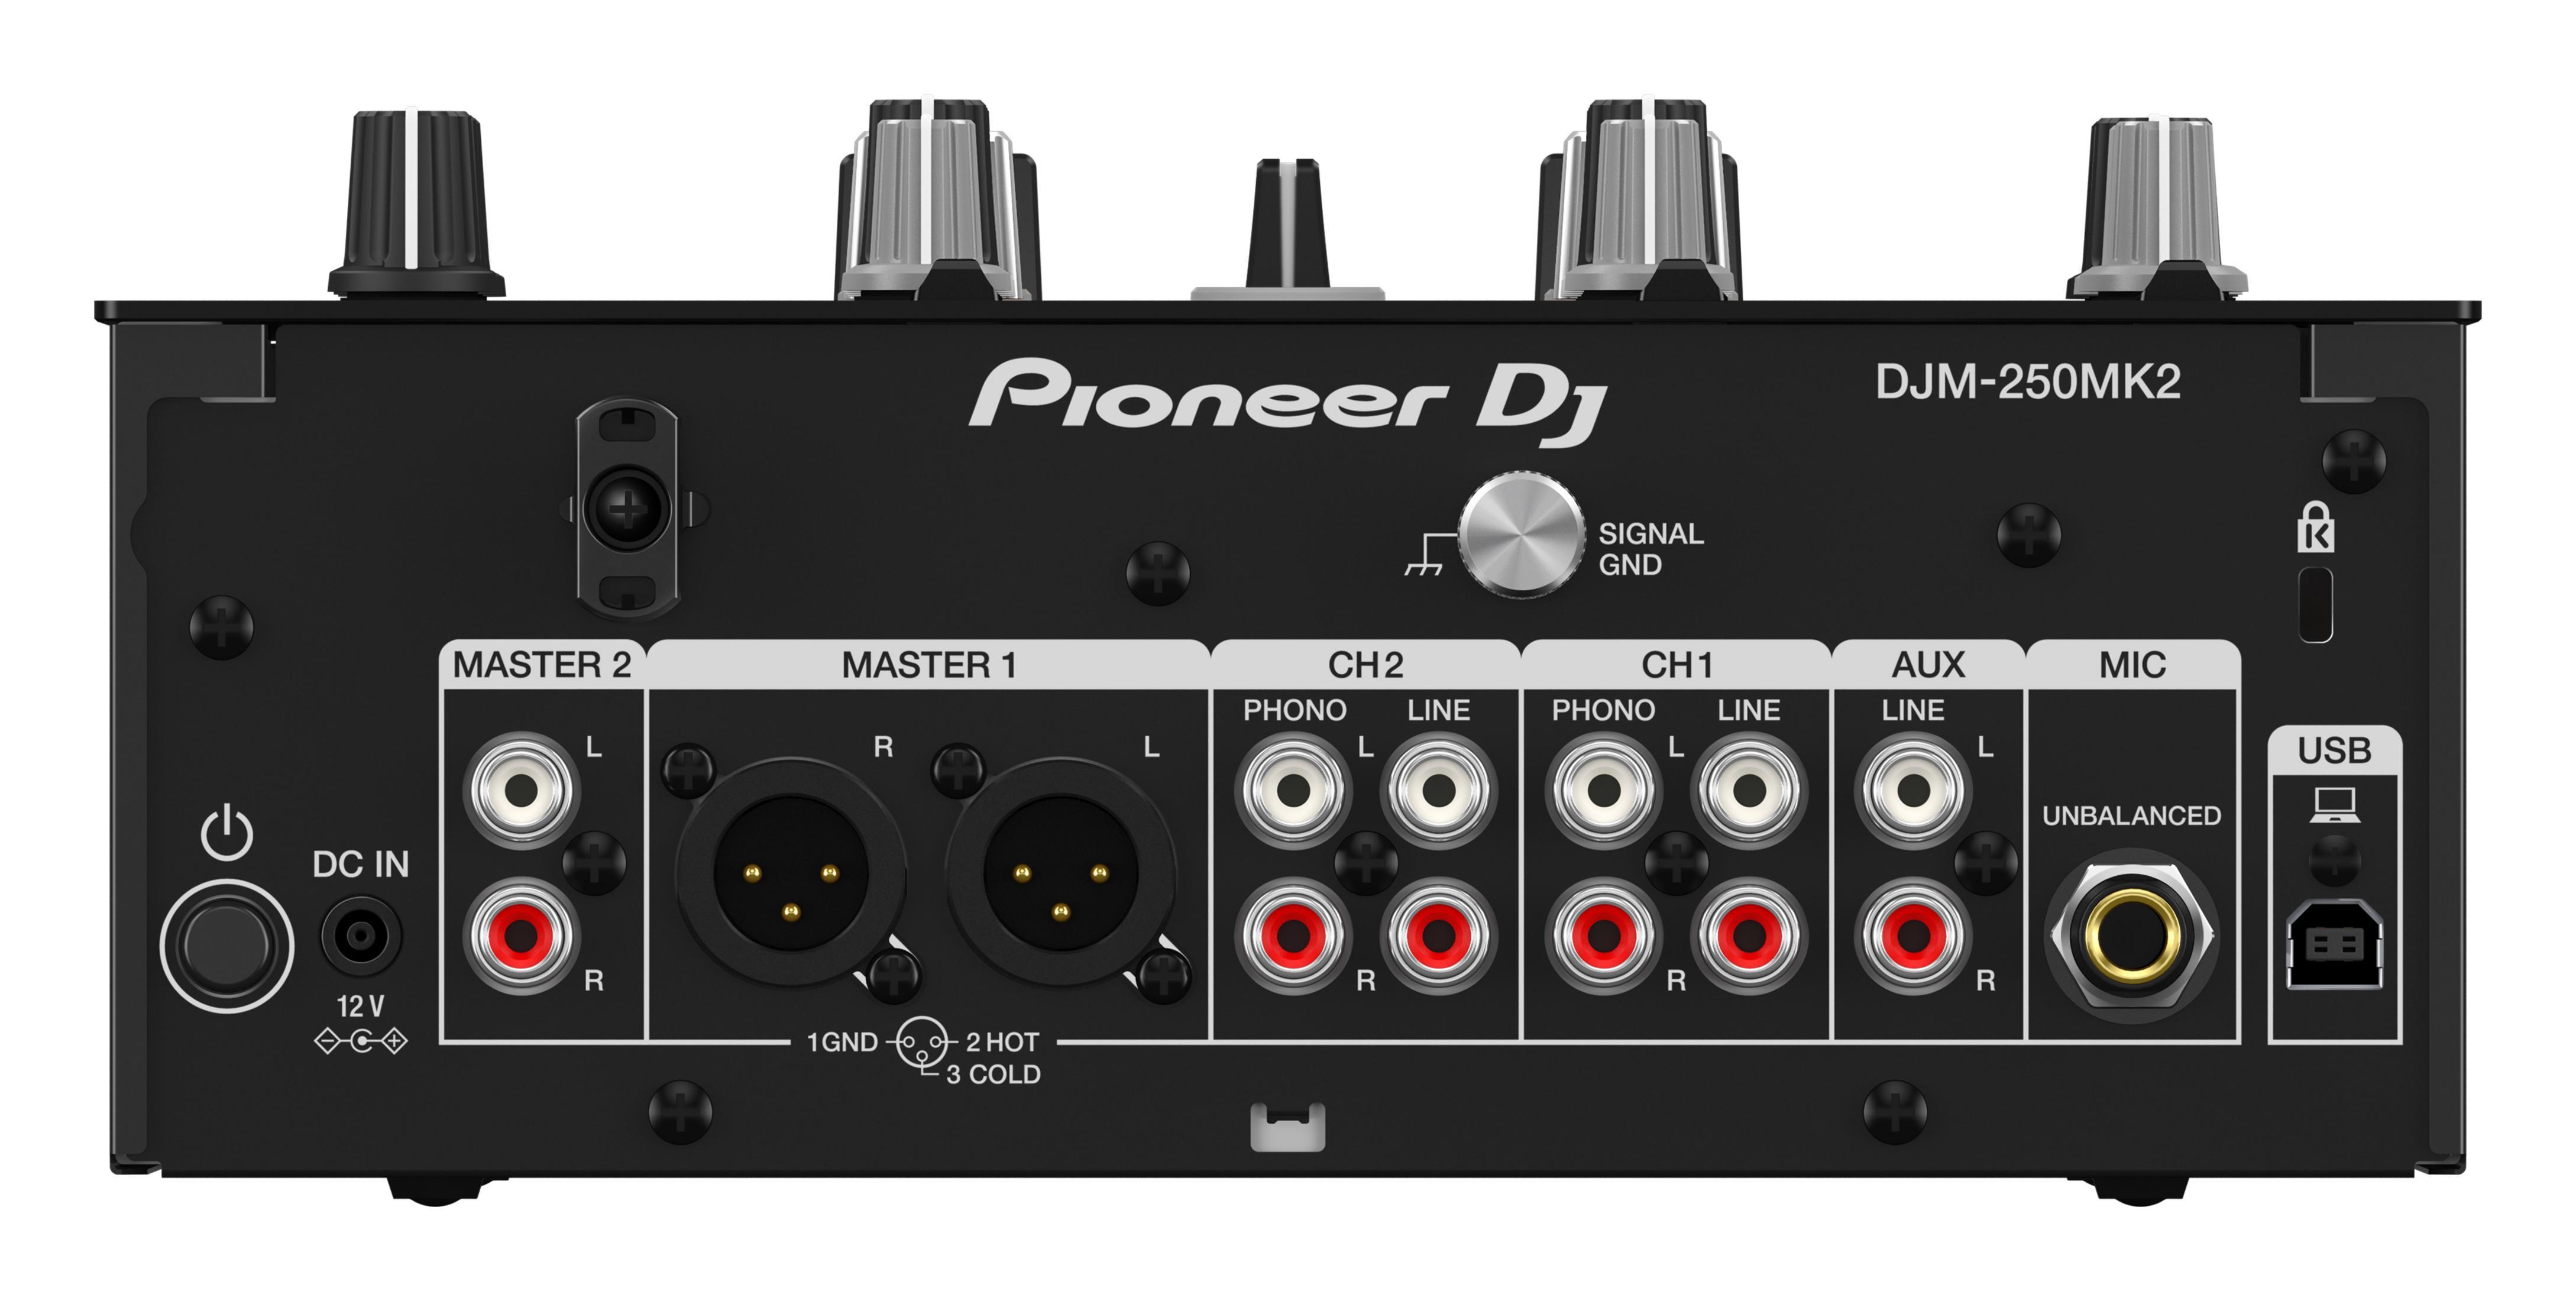 DJM-250MK2 PIONEER DJ Schwarz DJ-Mixer,